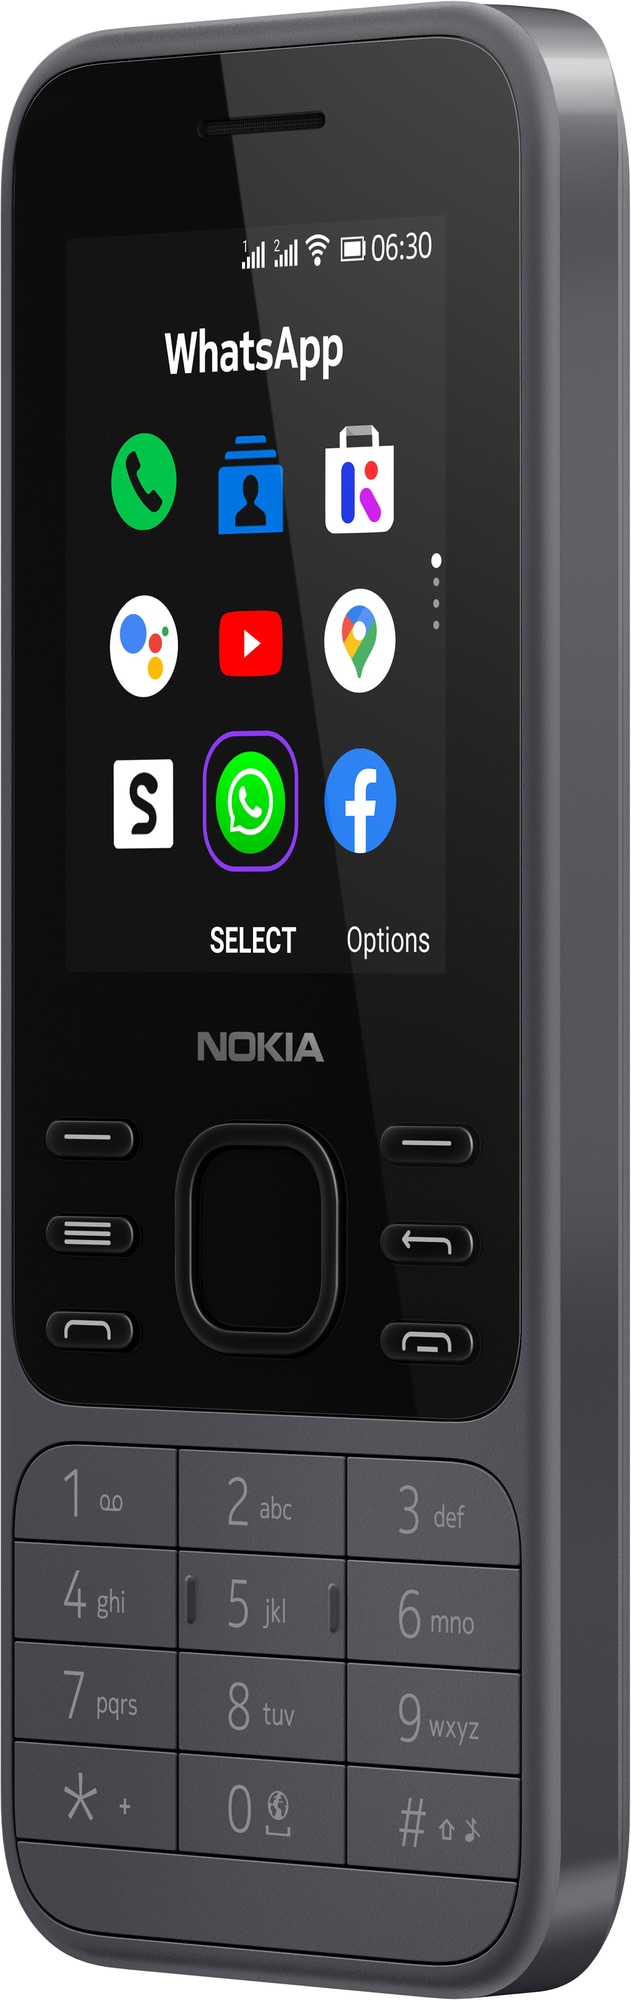 Nokia 6300 4G mobiltelefon (light charcoal) - Mobiltelefoner - Elgiganten